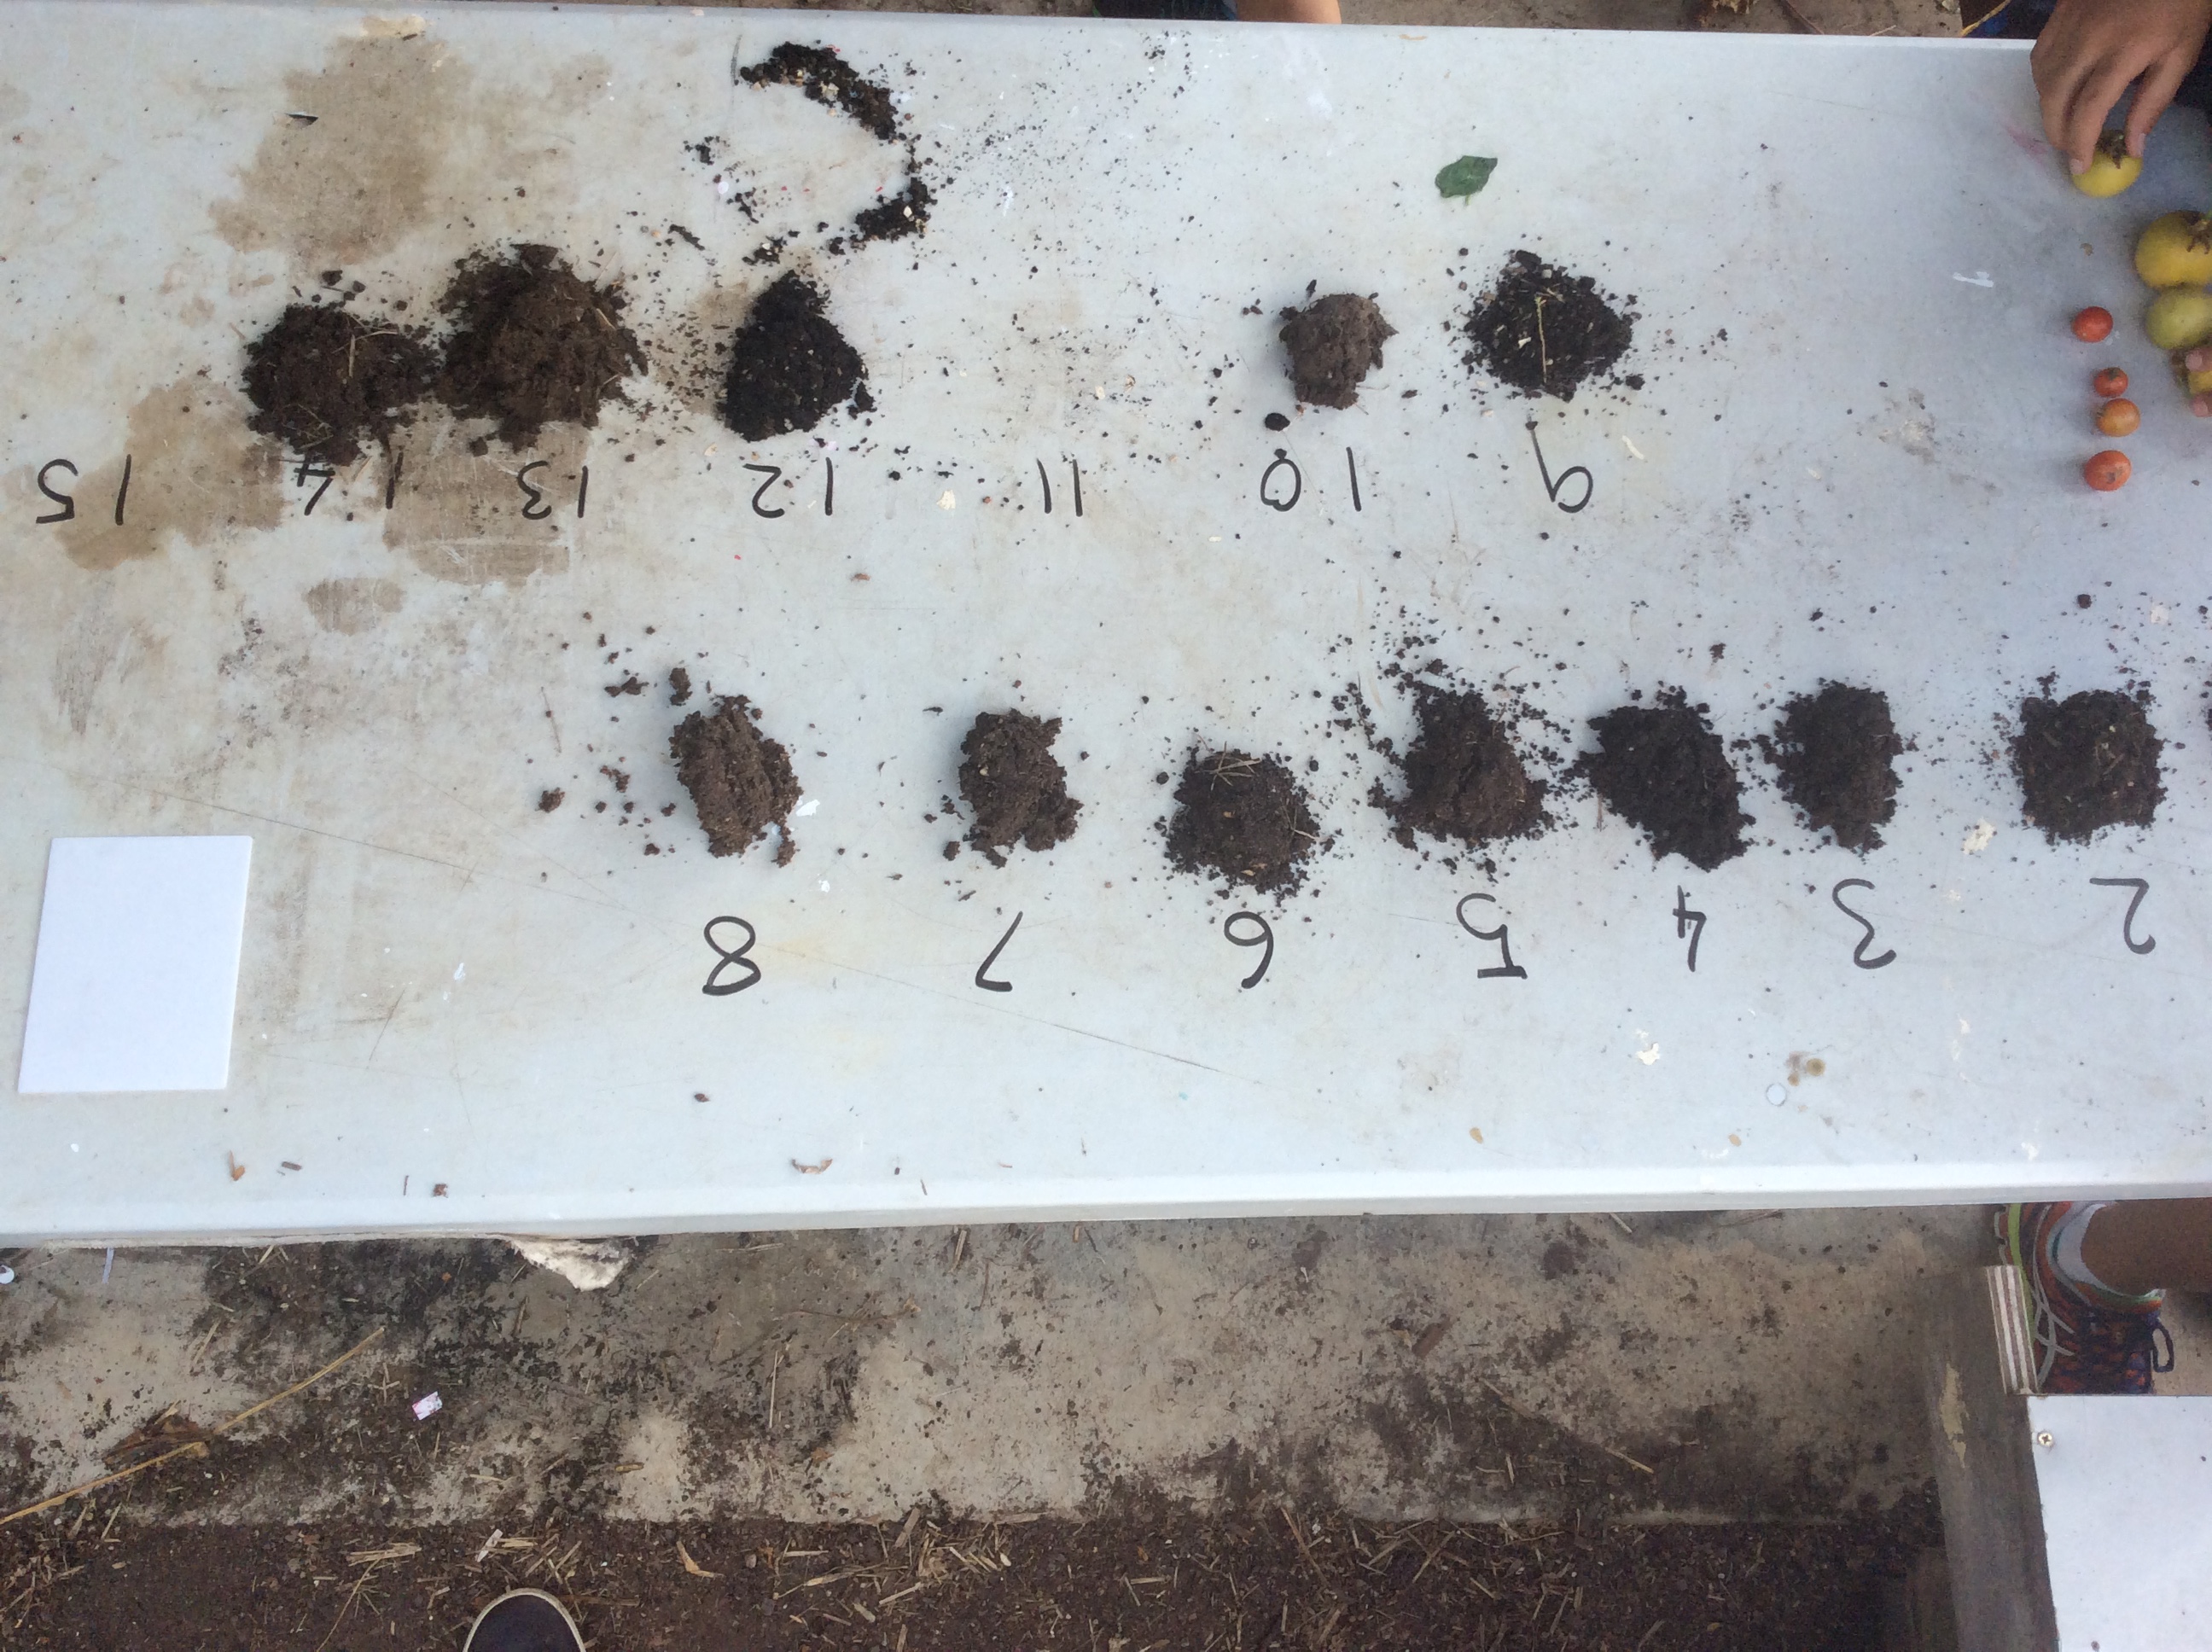 Measuring soil pH, Soil moisture and temperature